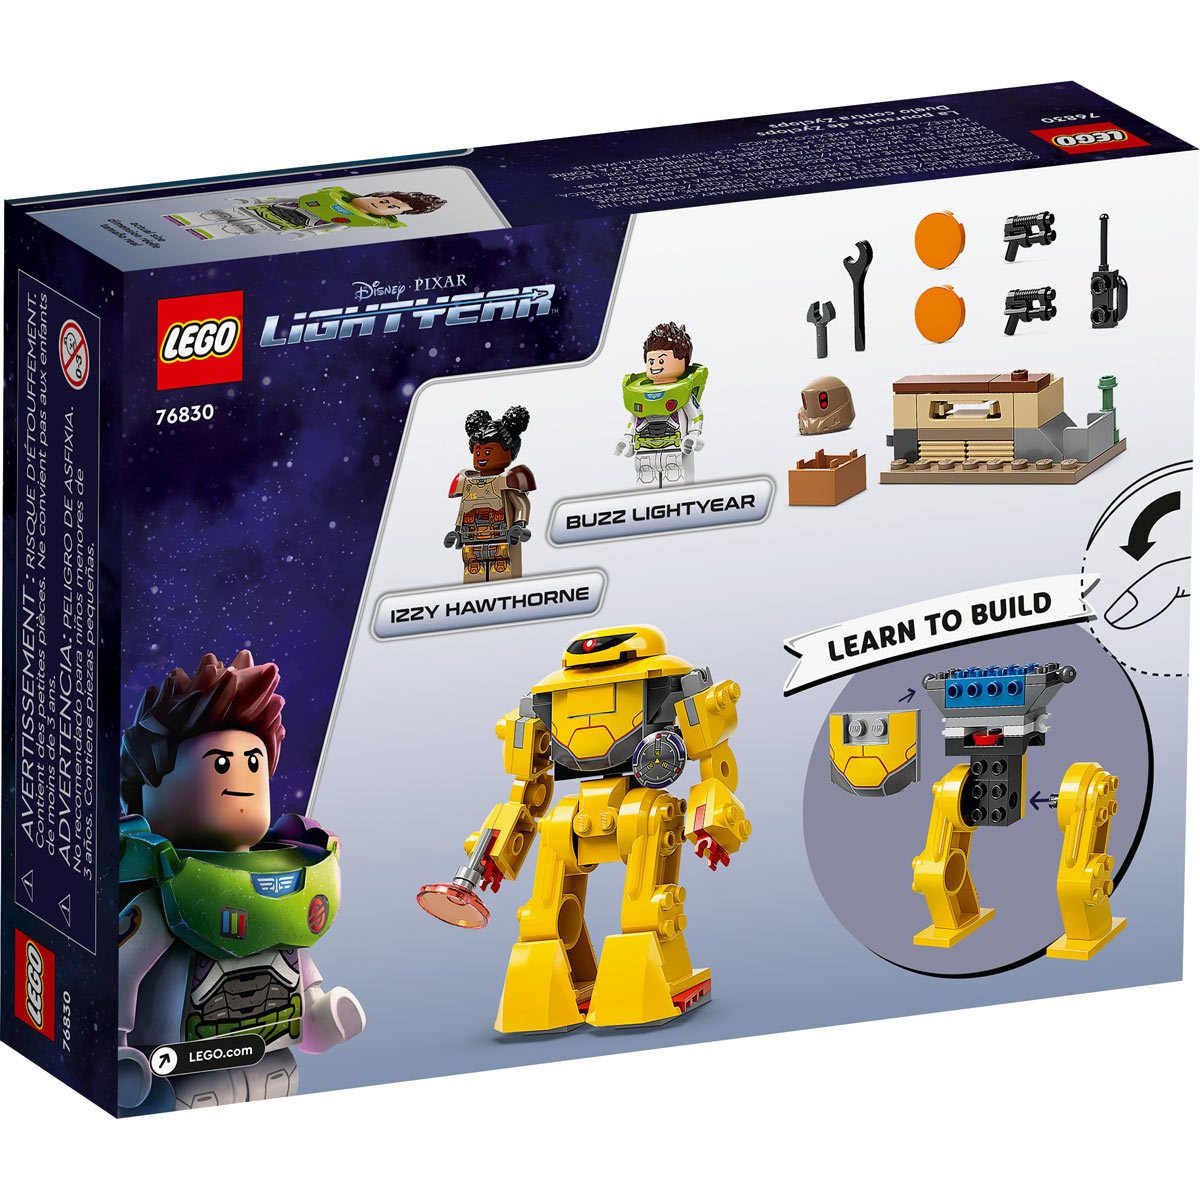 LEGO 76830 Disney and Pixar\'s Zyclops Lightyear Chase